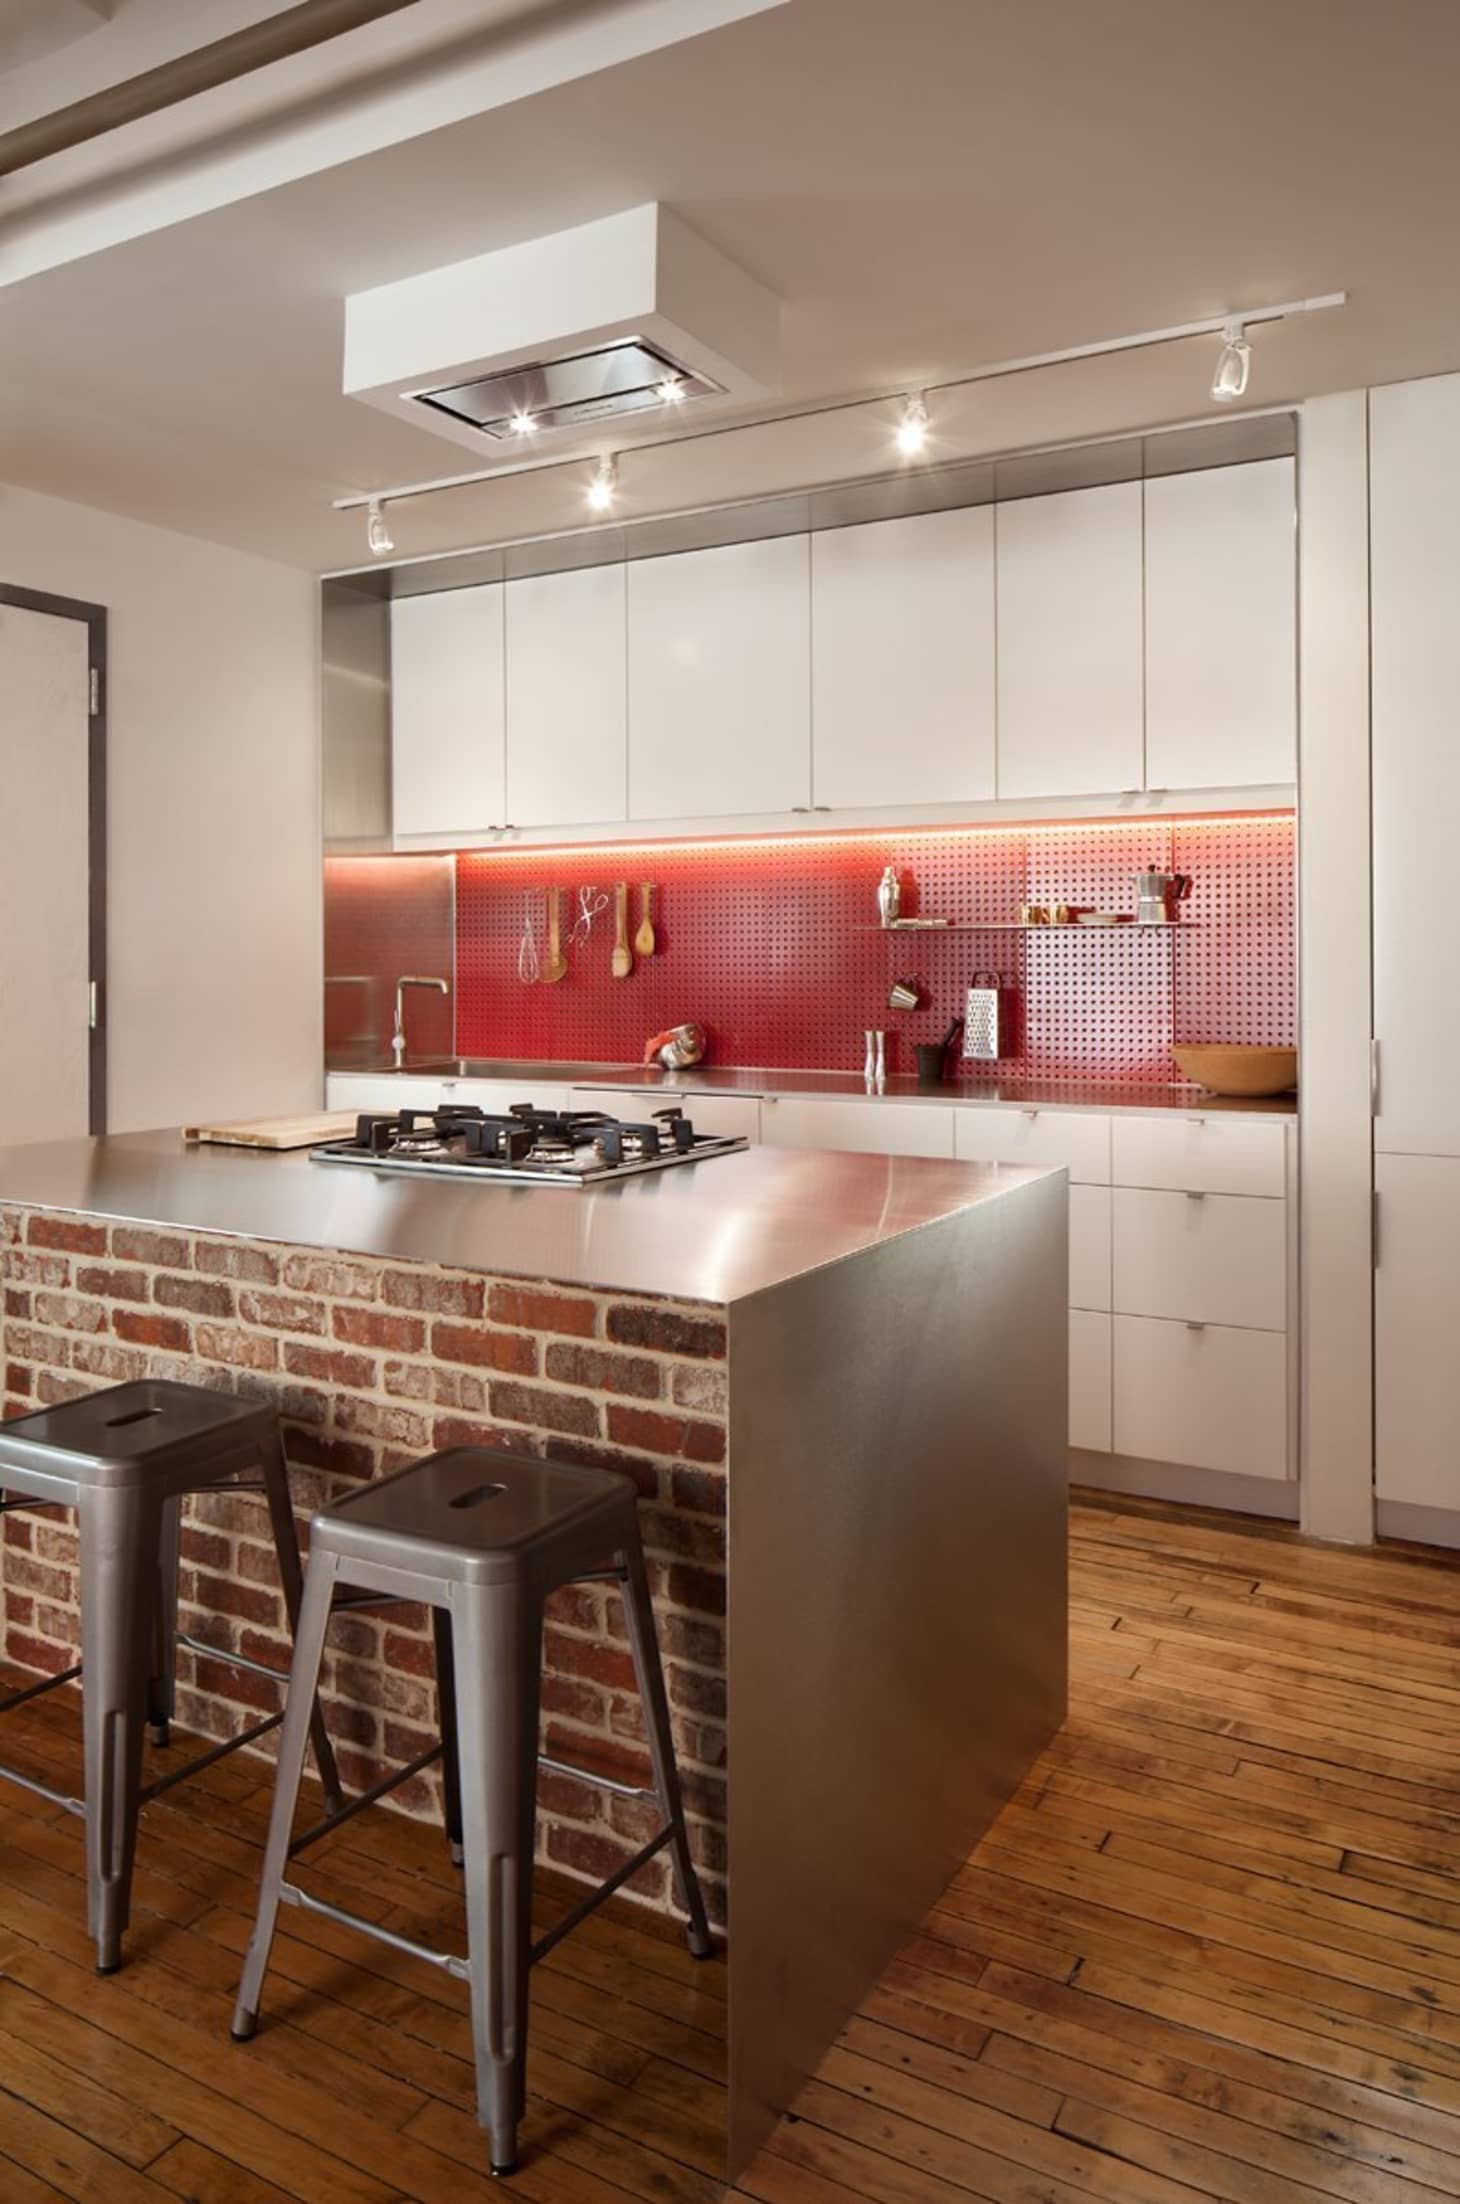  Backsplash  Ideas Unique Kitchen  Design Apartment  Therapy